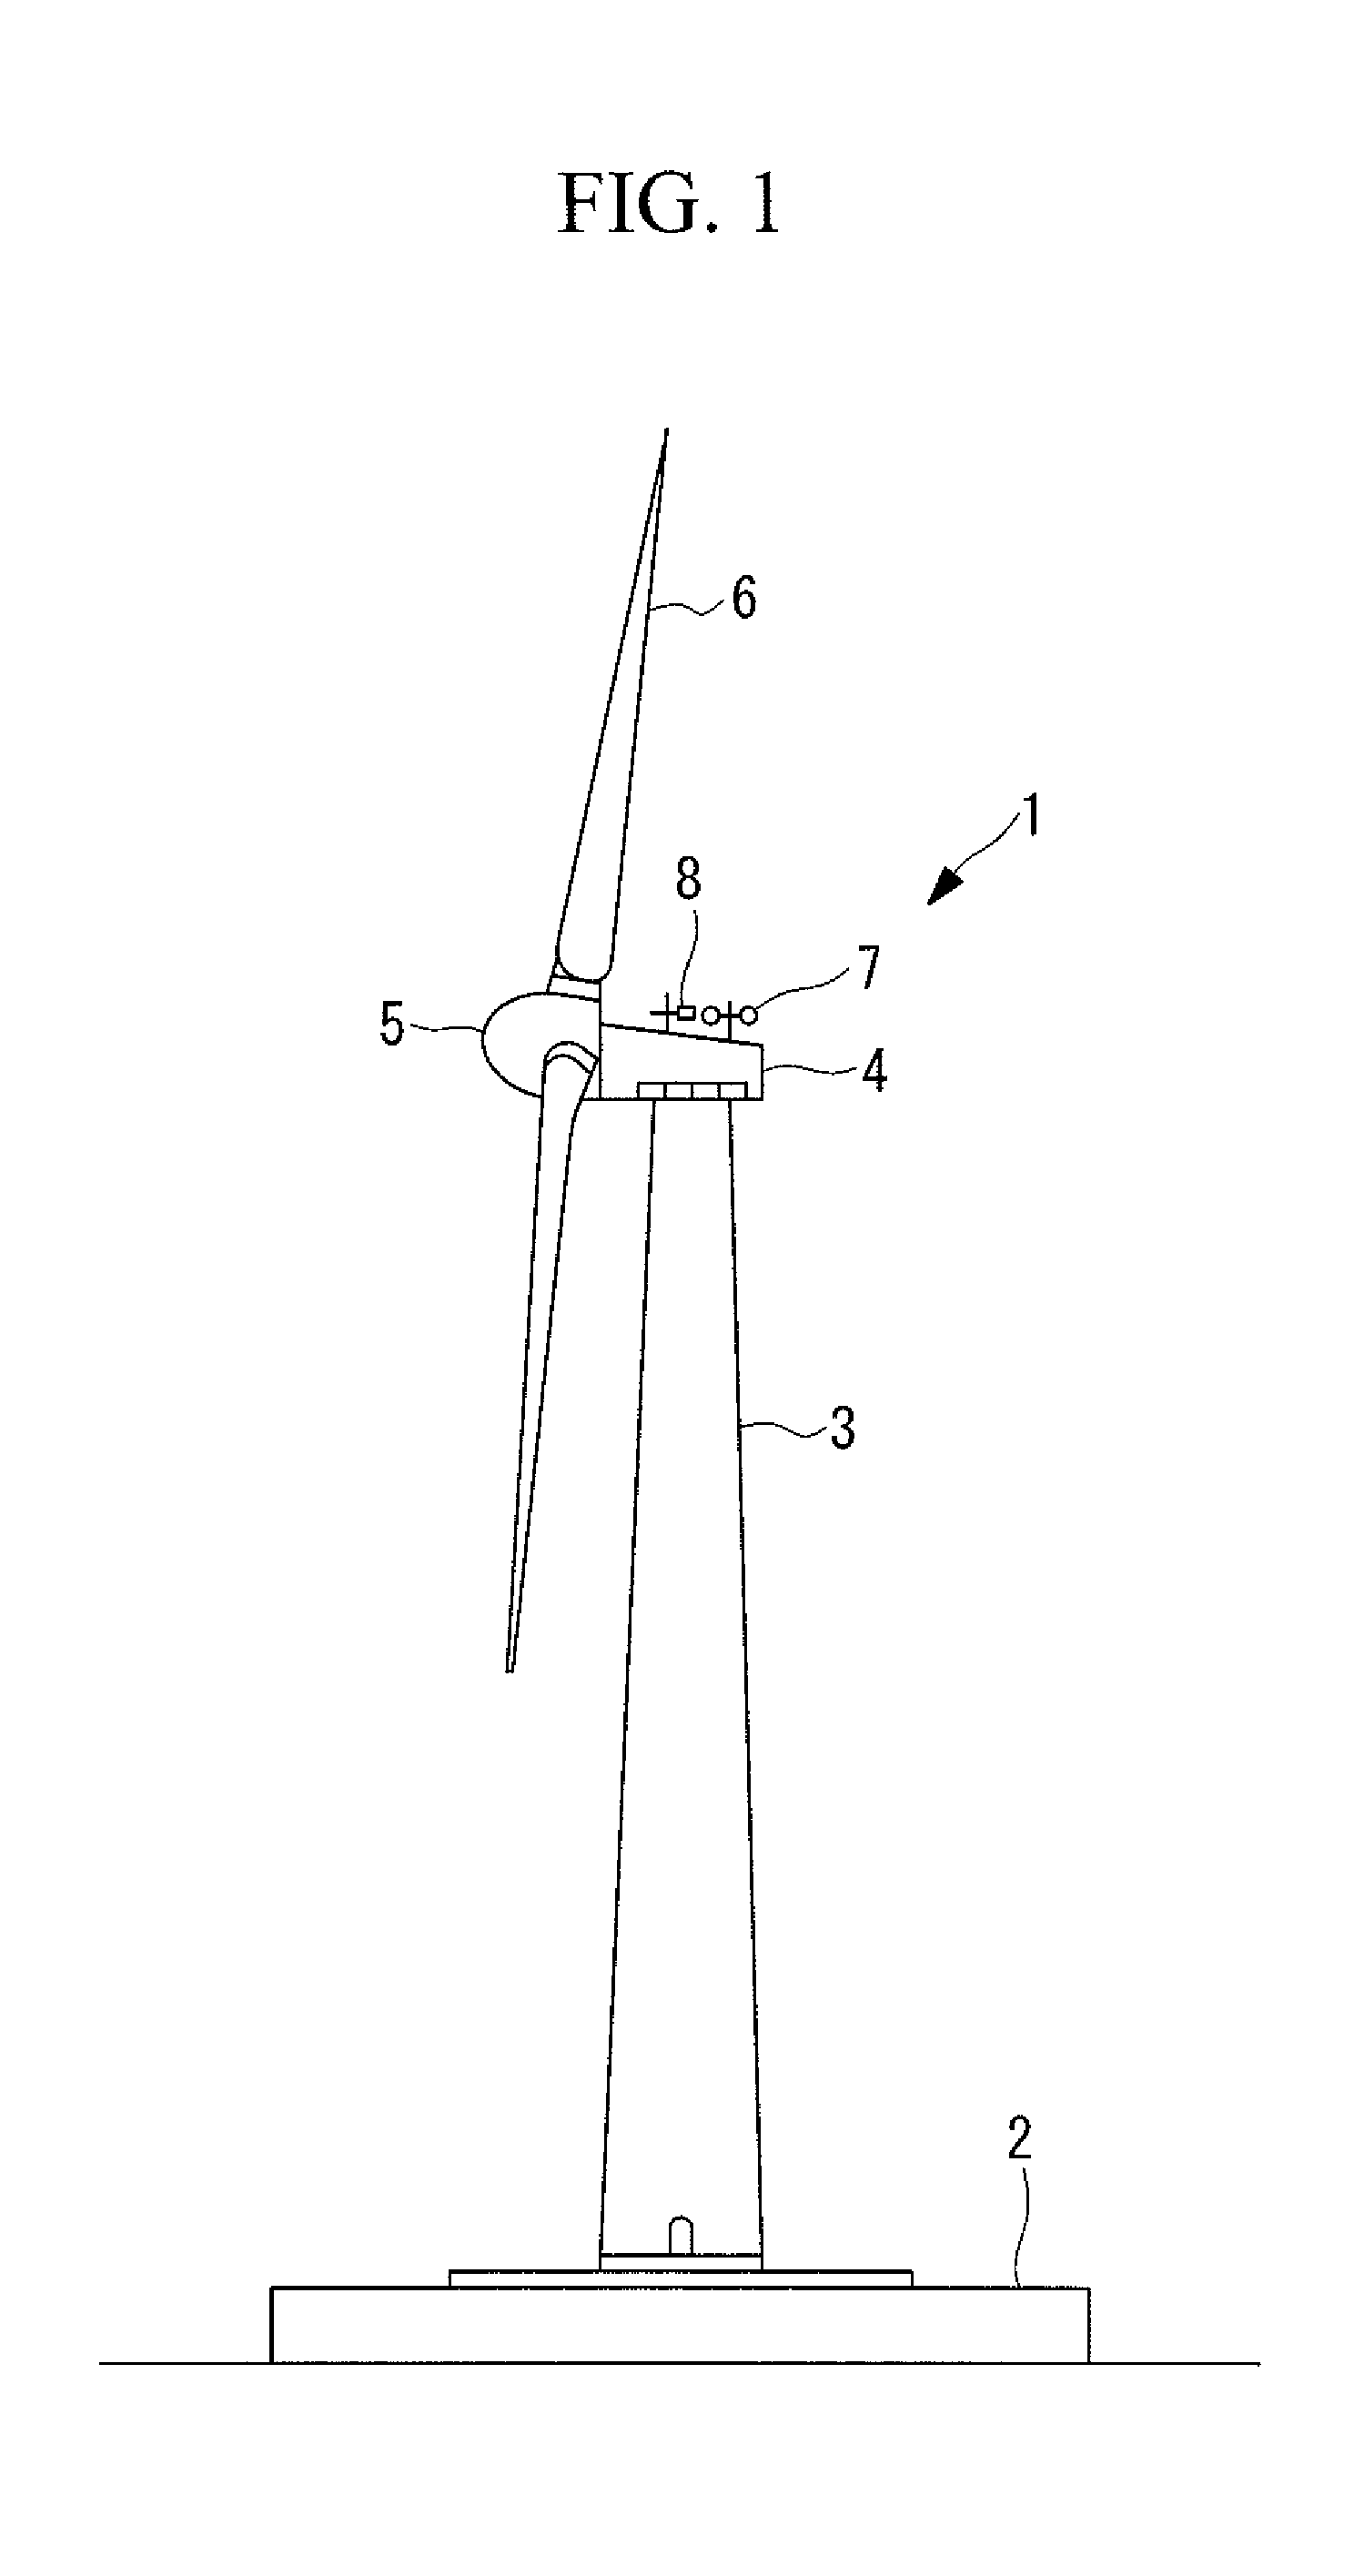 Wind turbine rotor blade